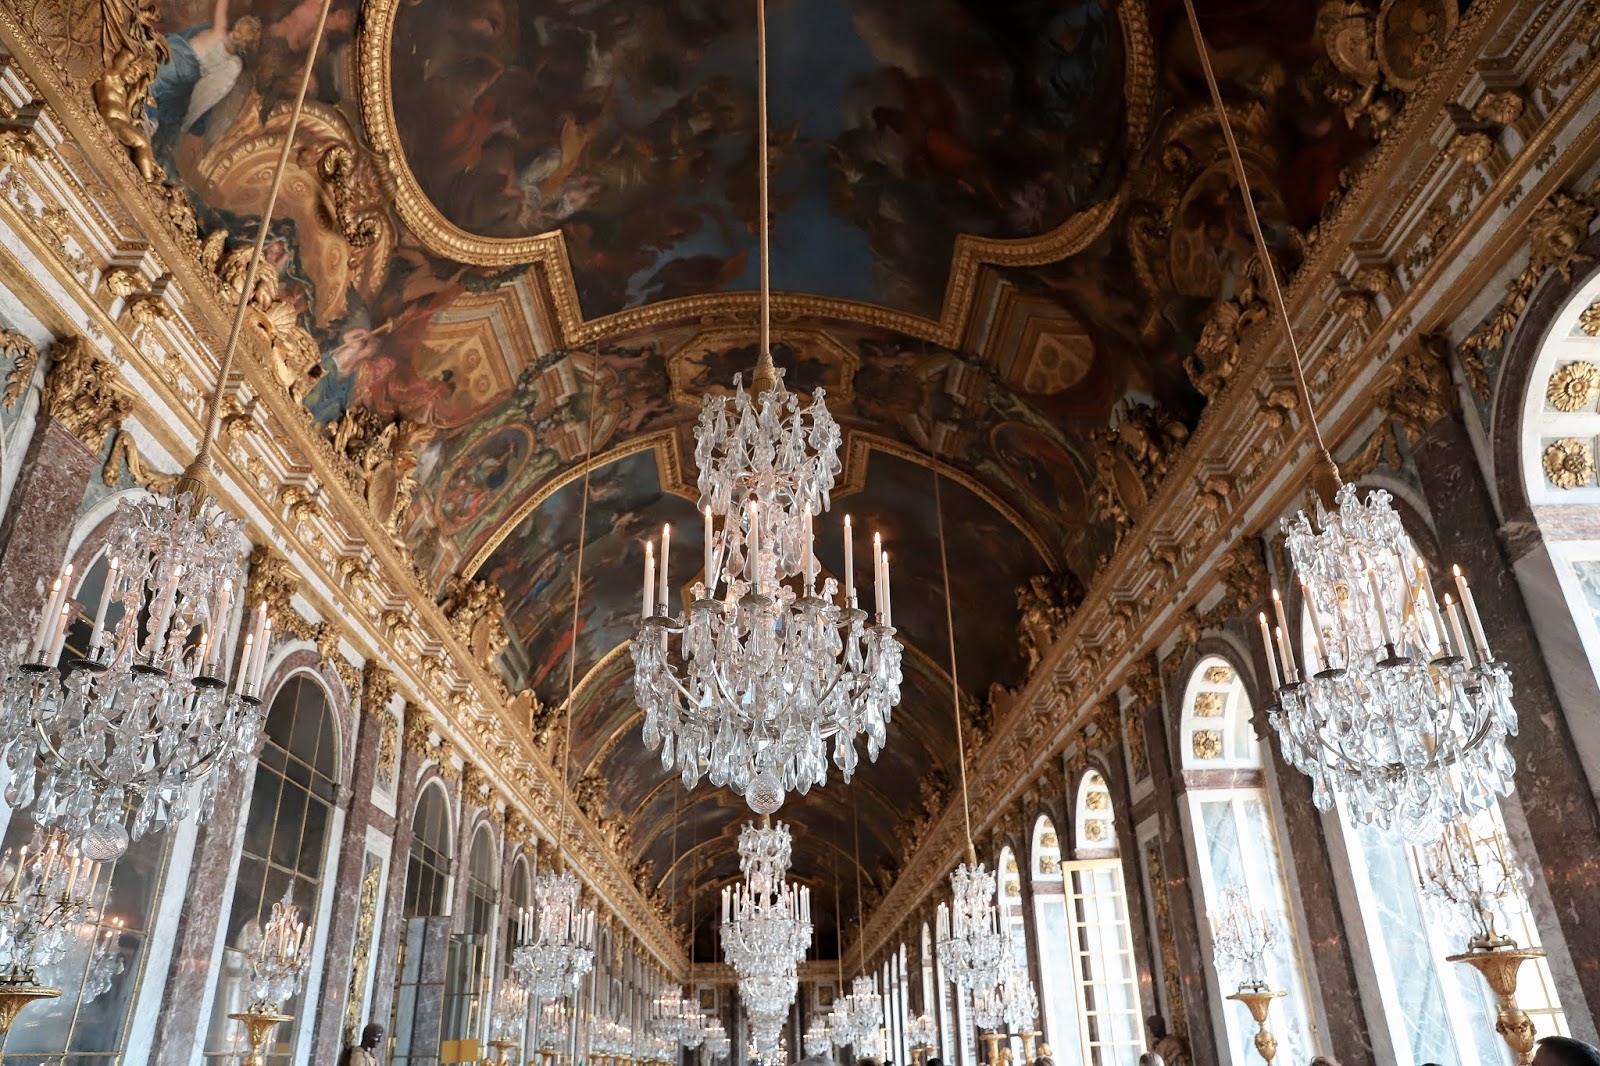 The Mirror Room at Palace of Versailles Paris